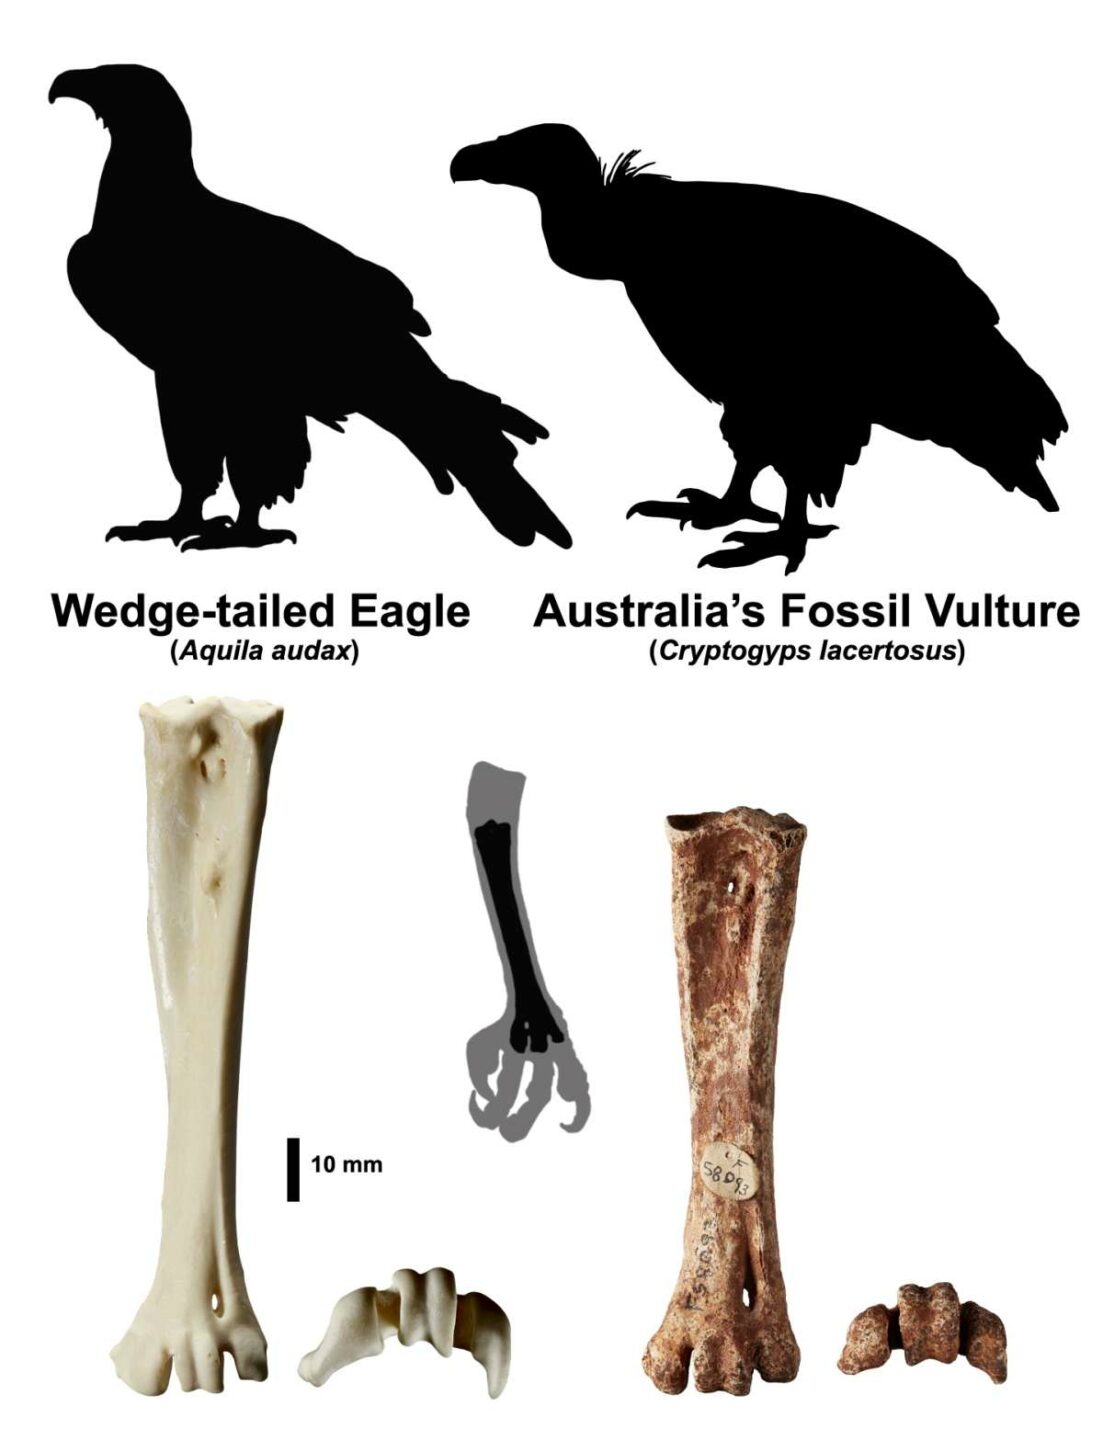 A comparison between eagle lower leg bones and fossil vulture lower leg bones